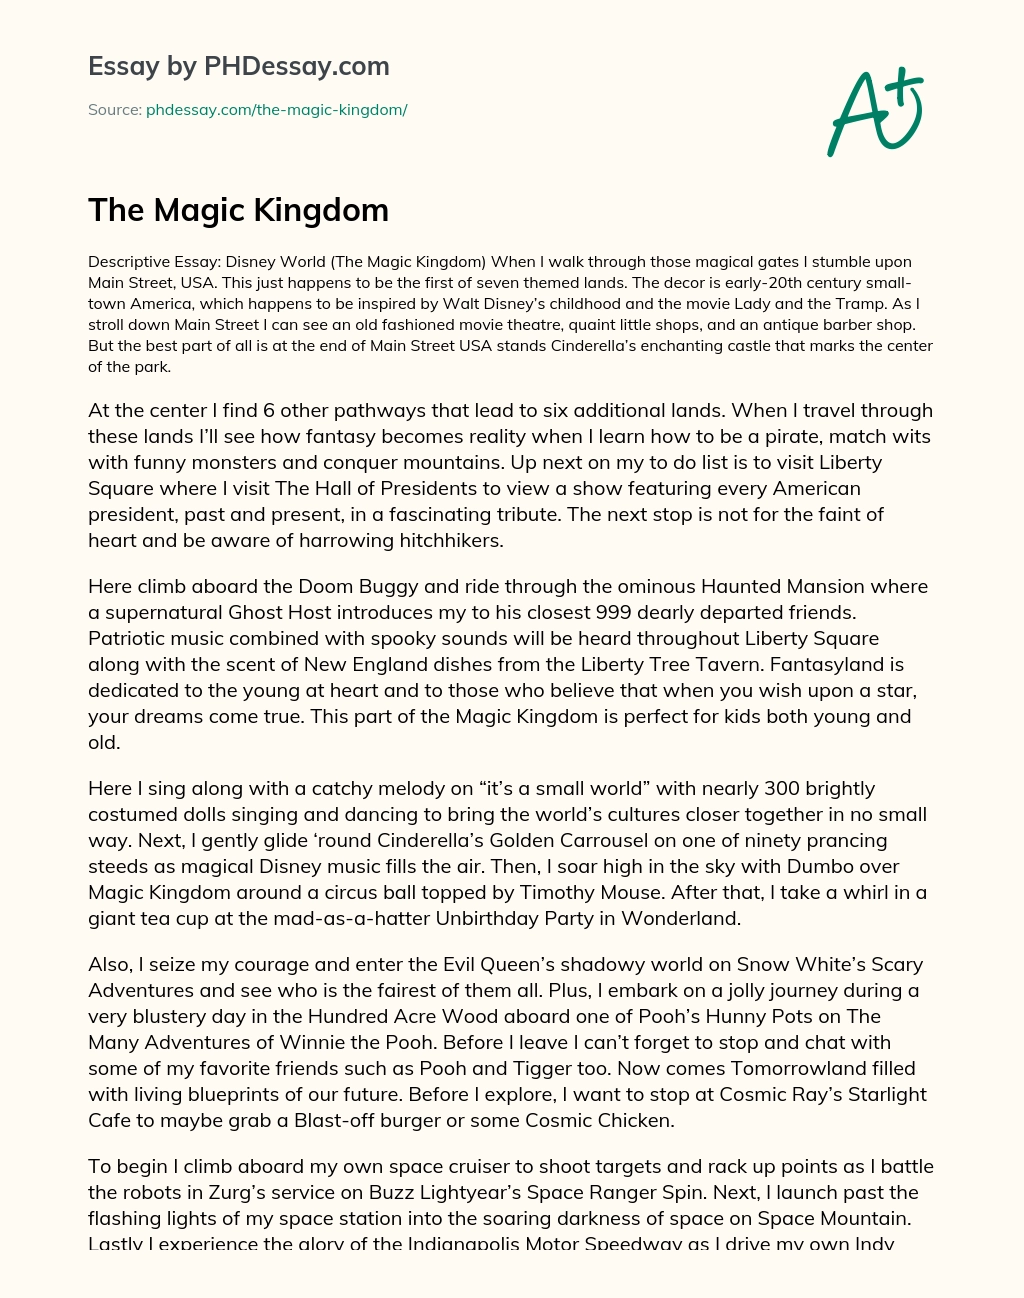 The Magic Kingdom essay